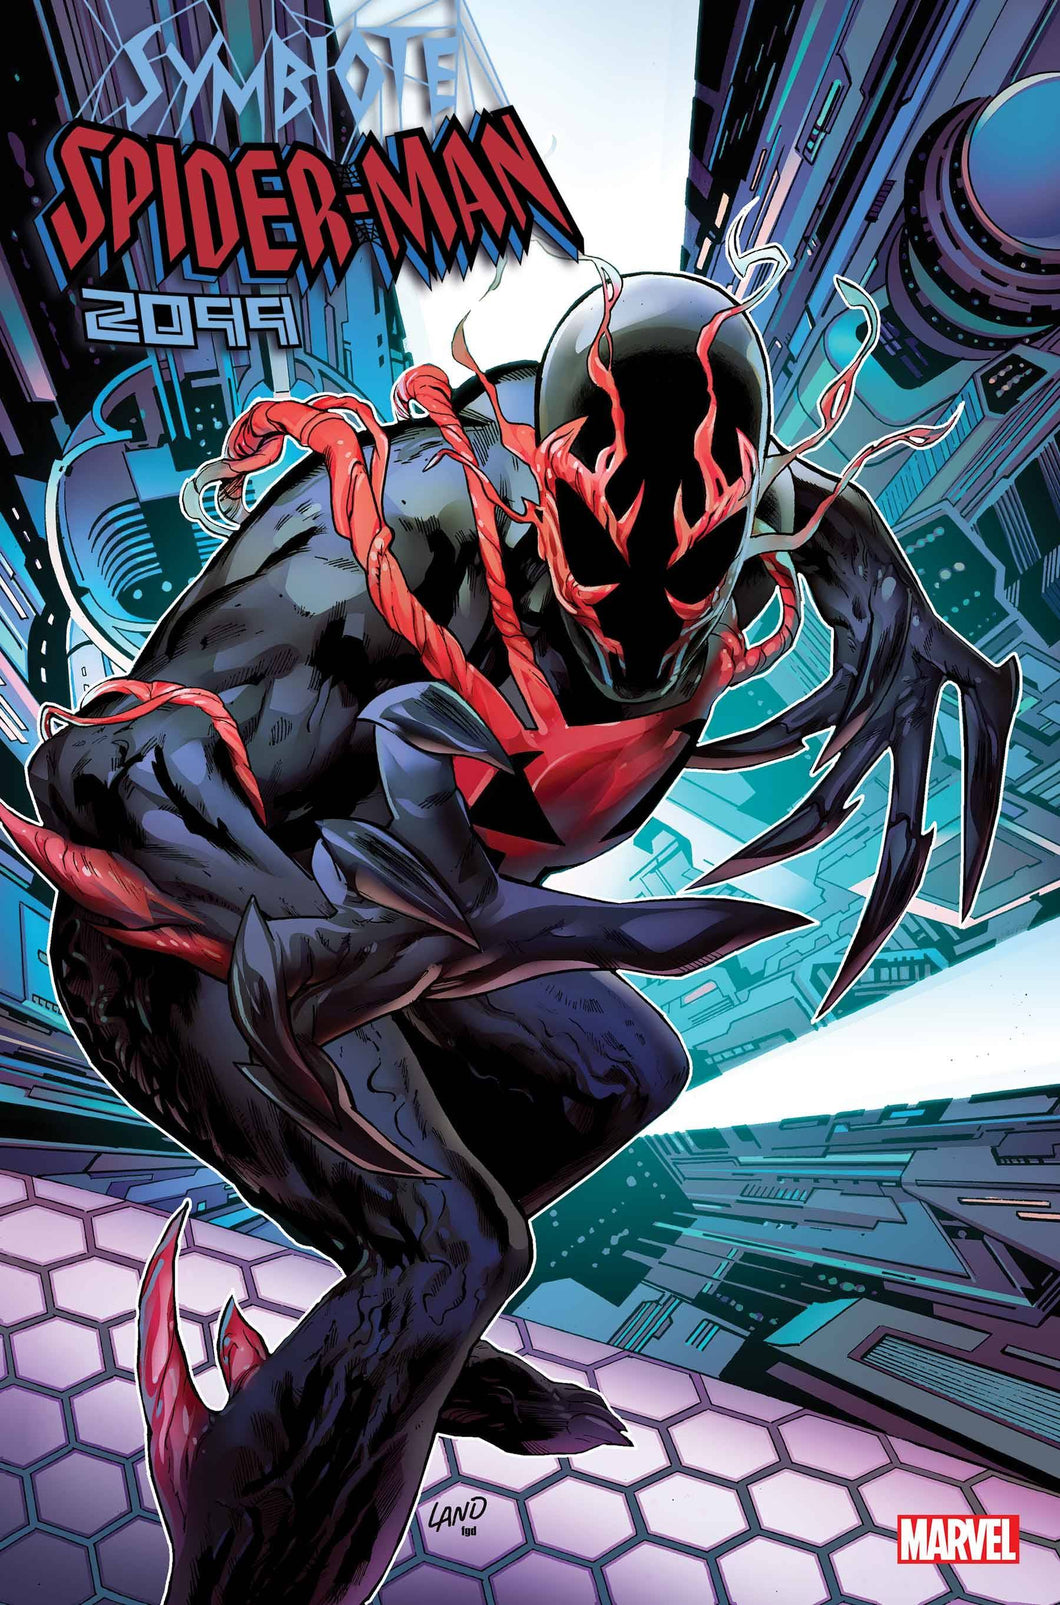 Copy of SYMBIOTE SPIDER-MAN 2099 #1 (GREG LAND VARIANT)